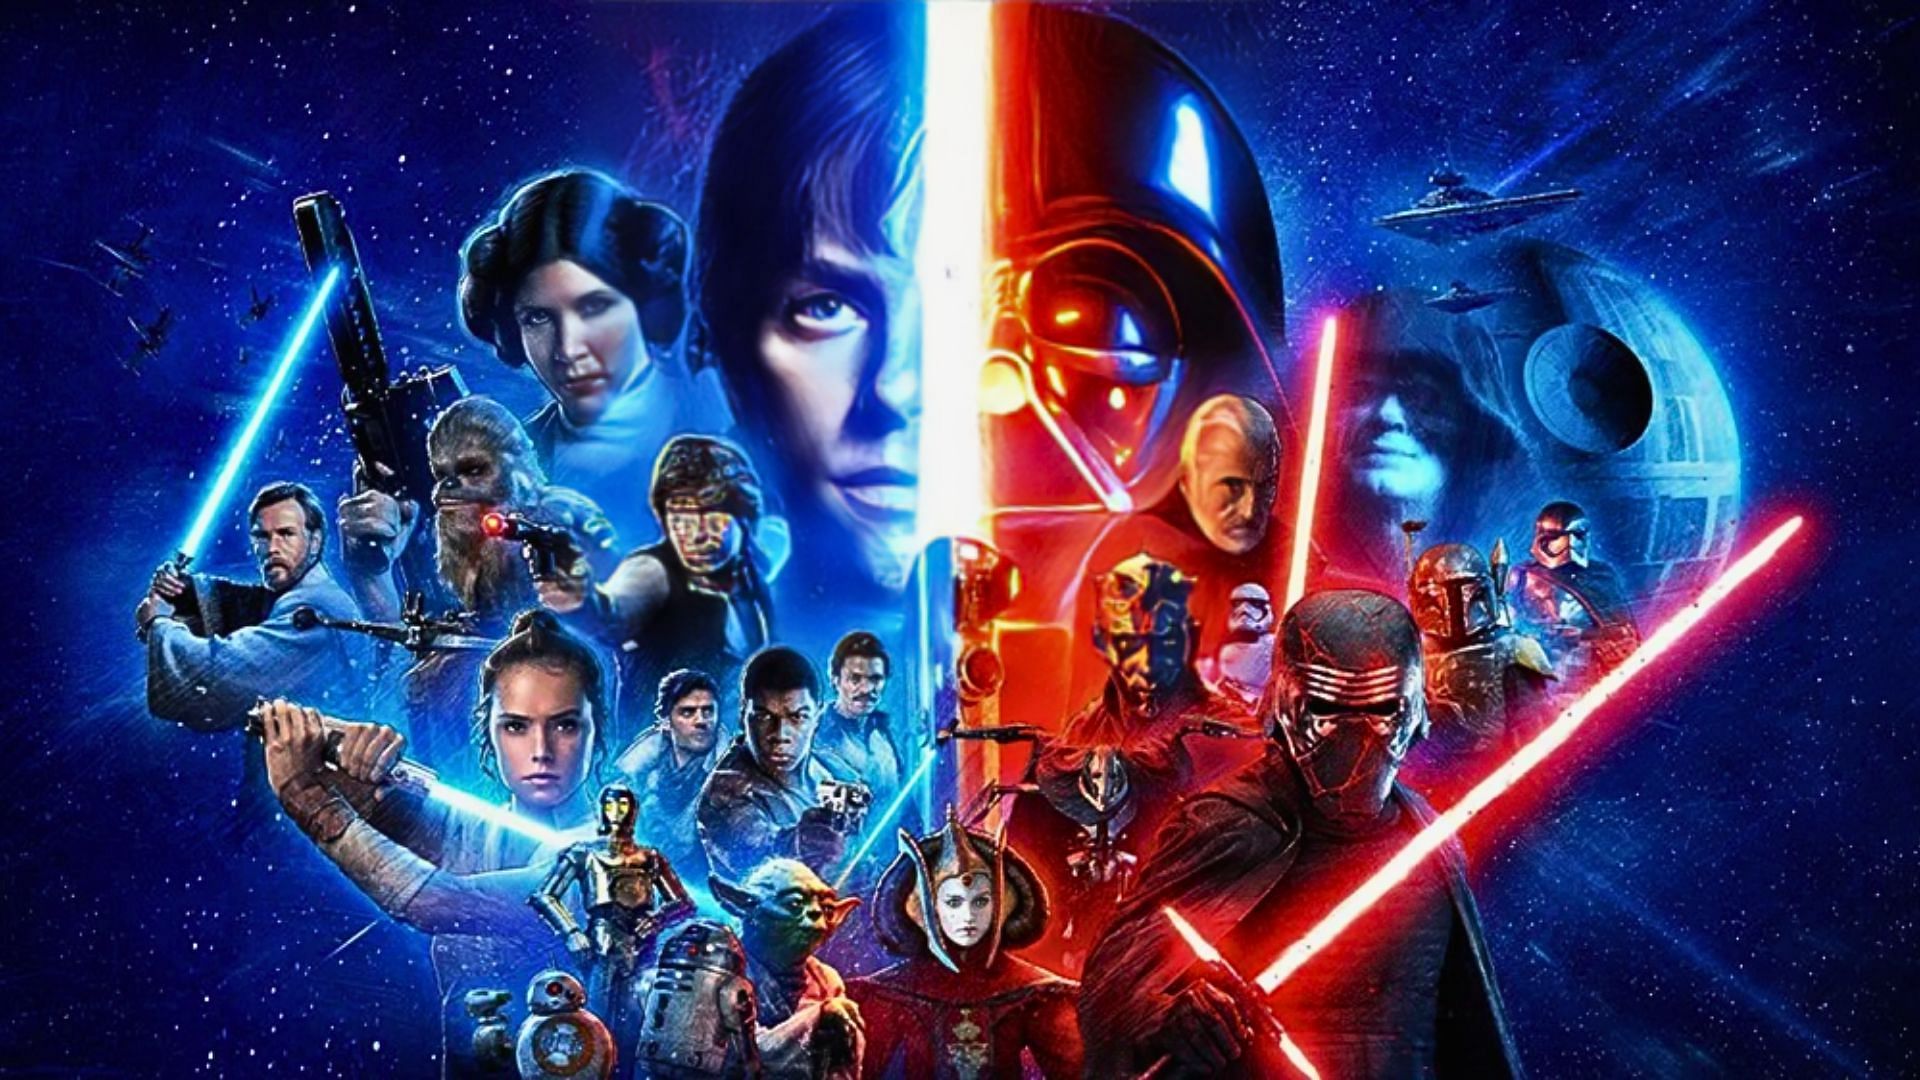 A marathon of all nine episodes of the Star Wars Skywalker Saga will be released soon (Image via Star Wars website)